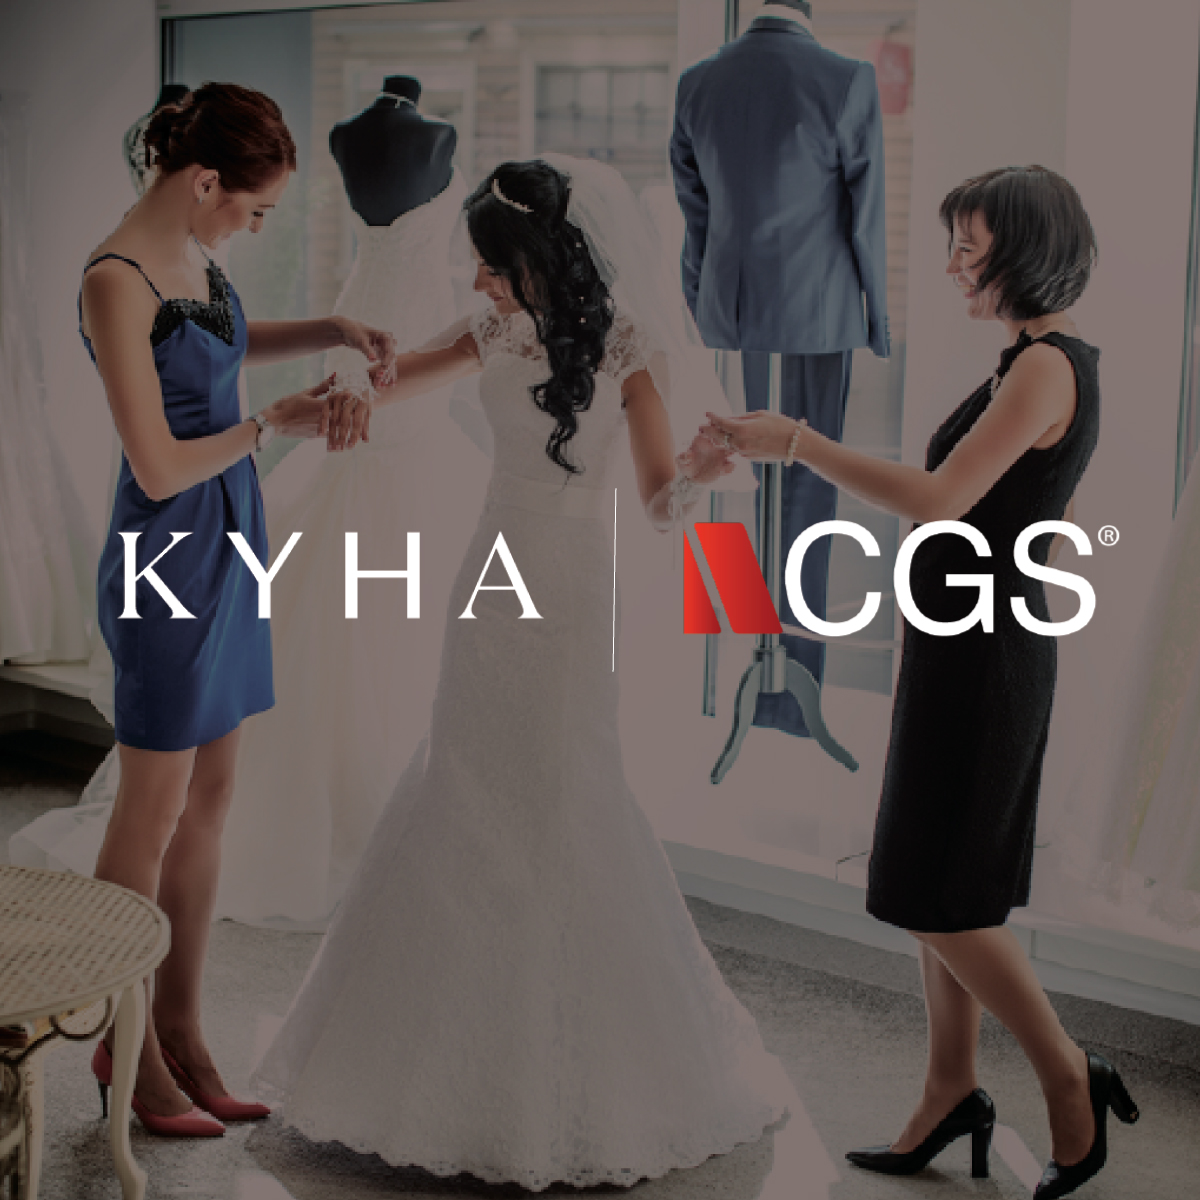 KYHA Studios and CGS